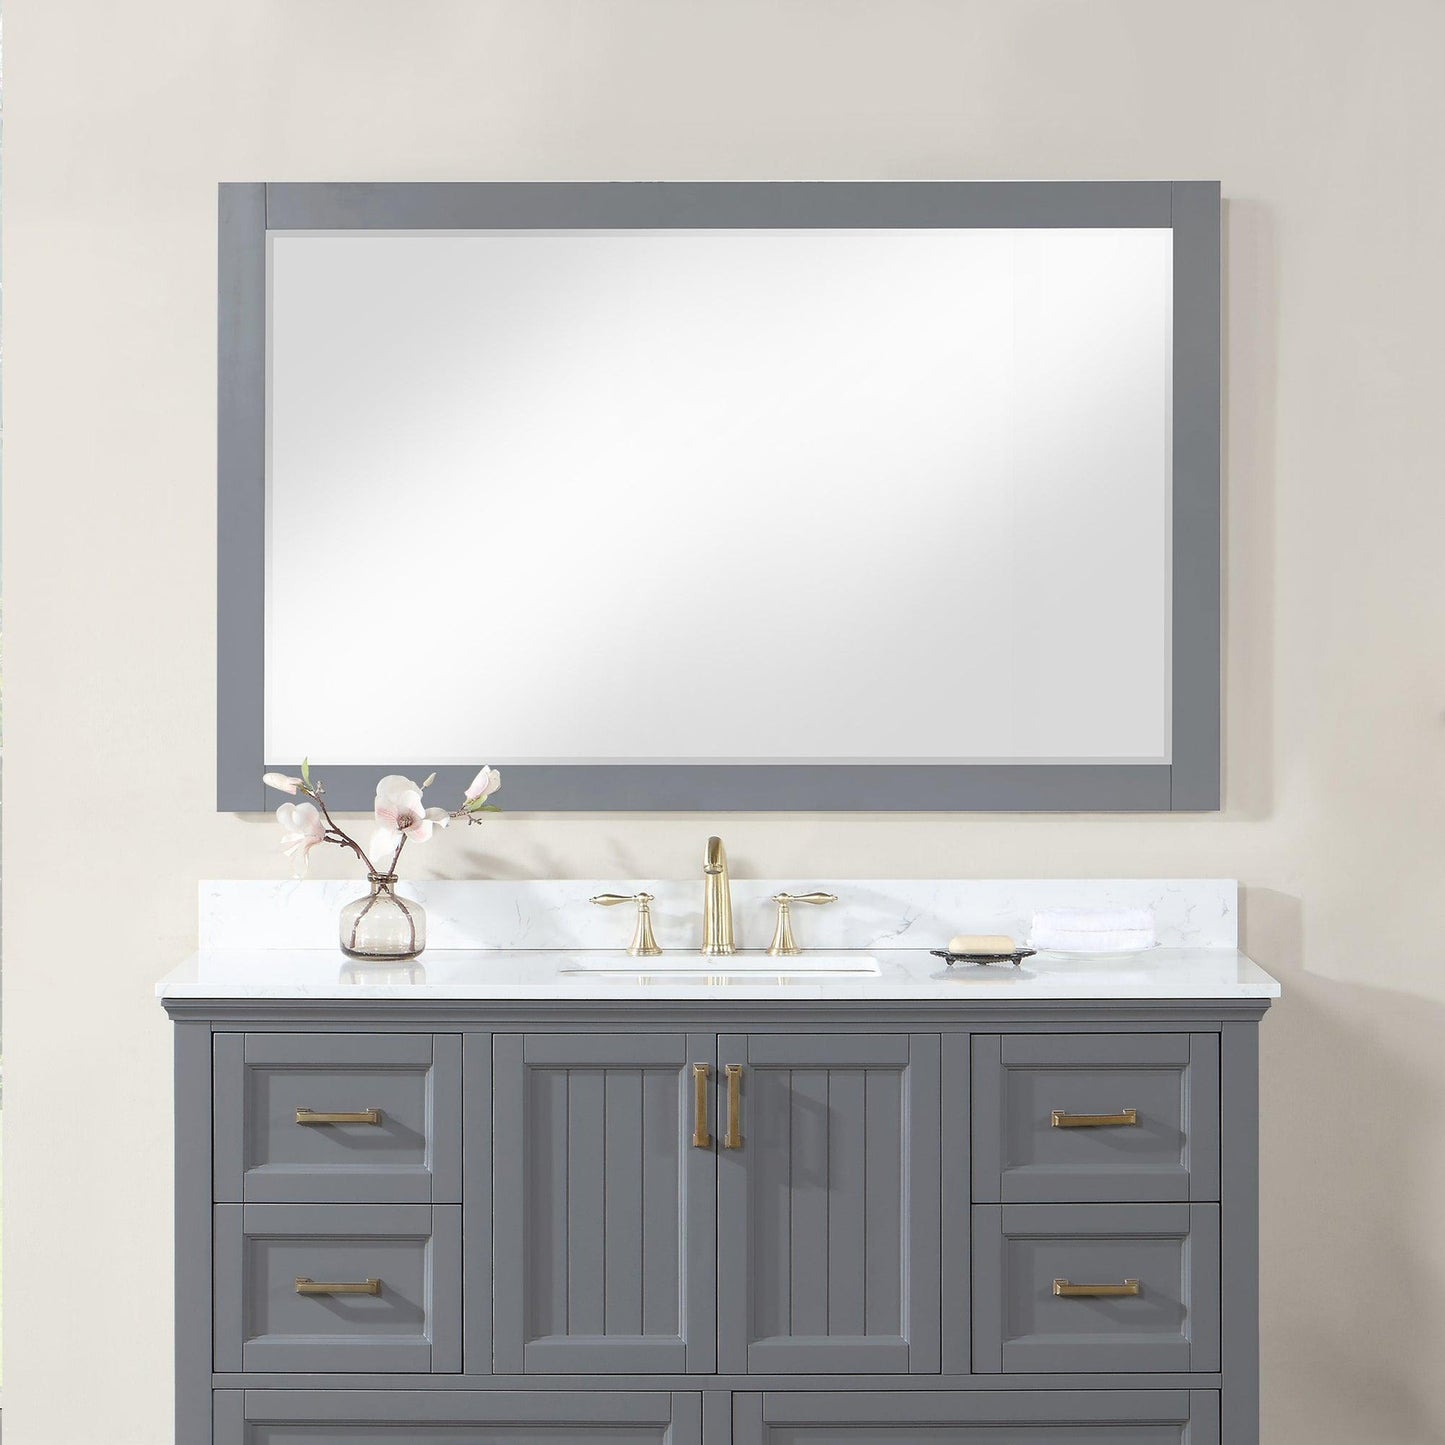 Altair Maribella 57" x 36" Rectangle Gray Wood Framed Wall-Mounted Mirror